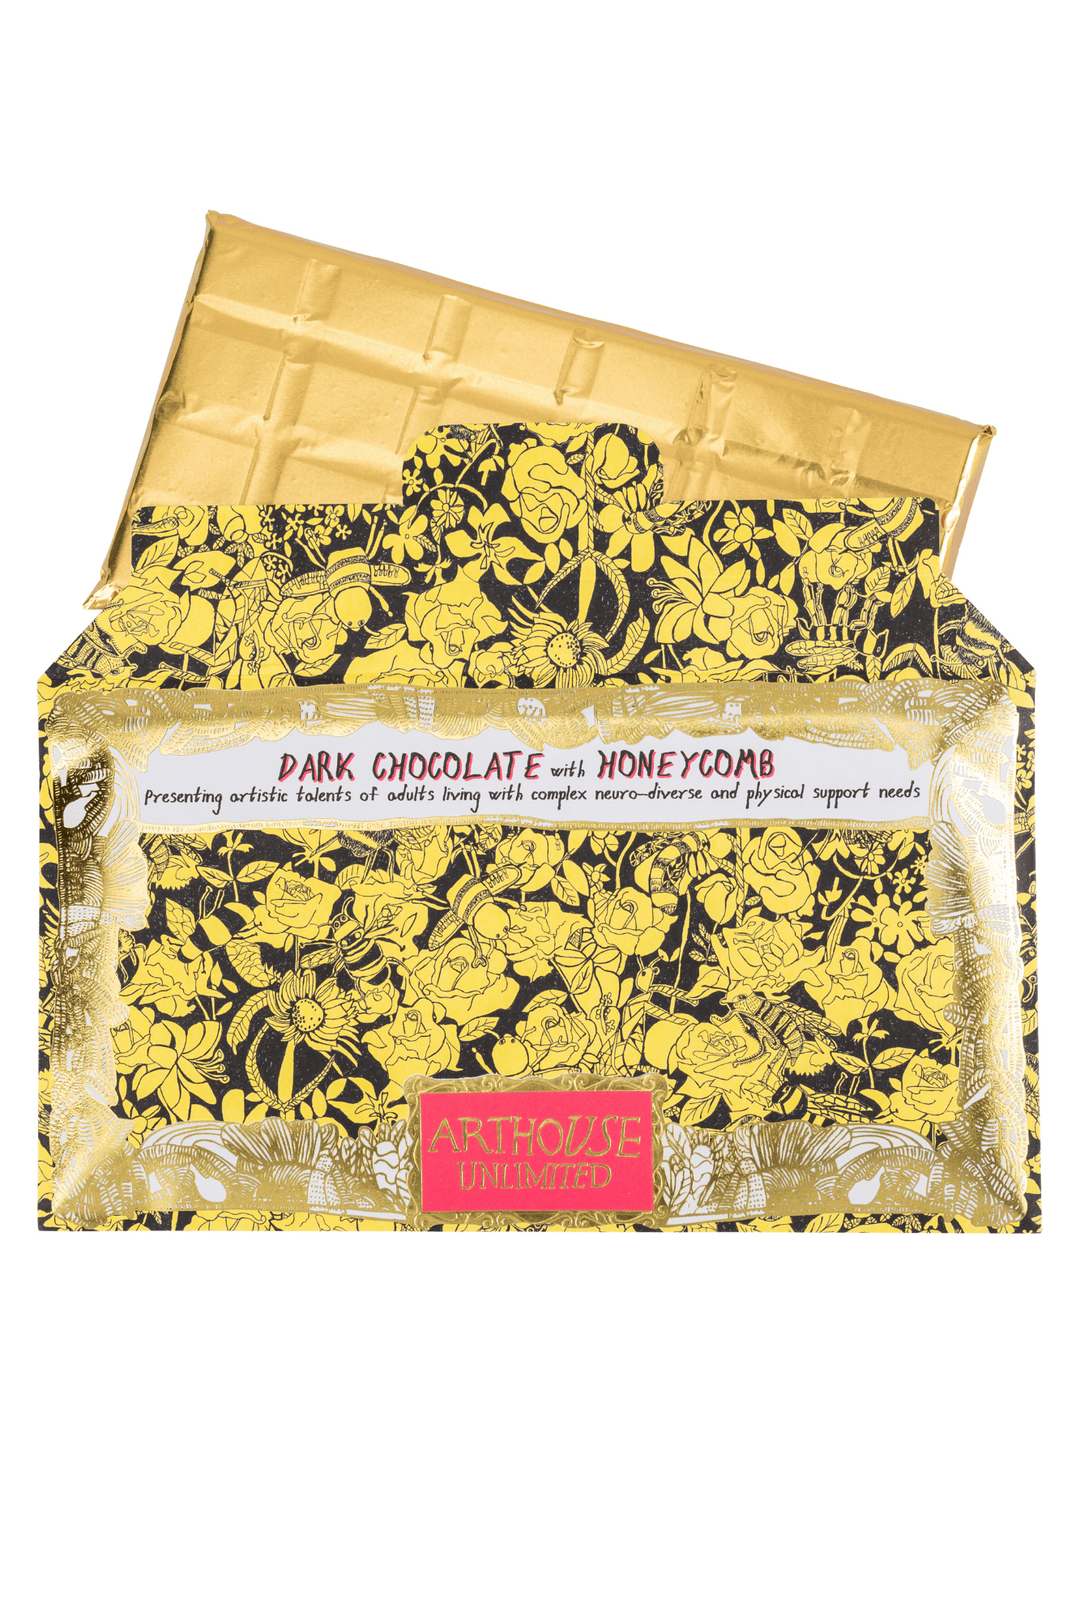 Art House Bees Honey Comb & Dark Chocolate Bar - One Hundred Stars